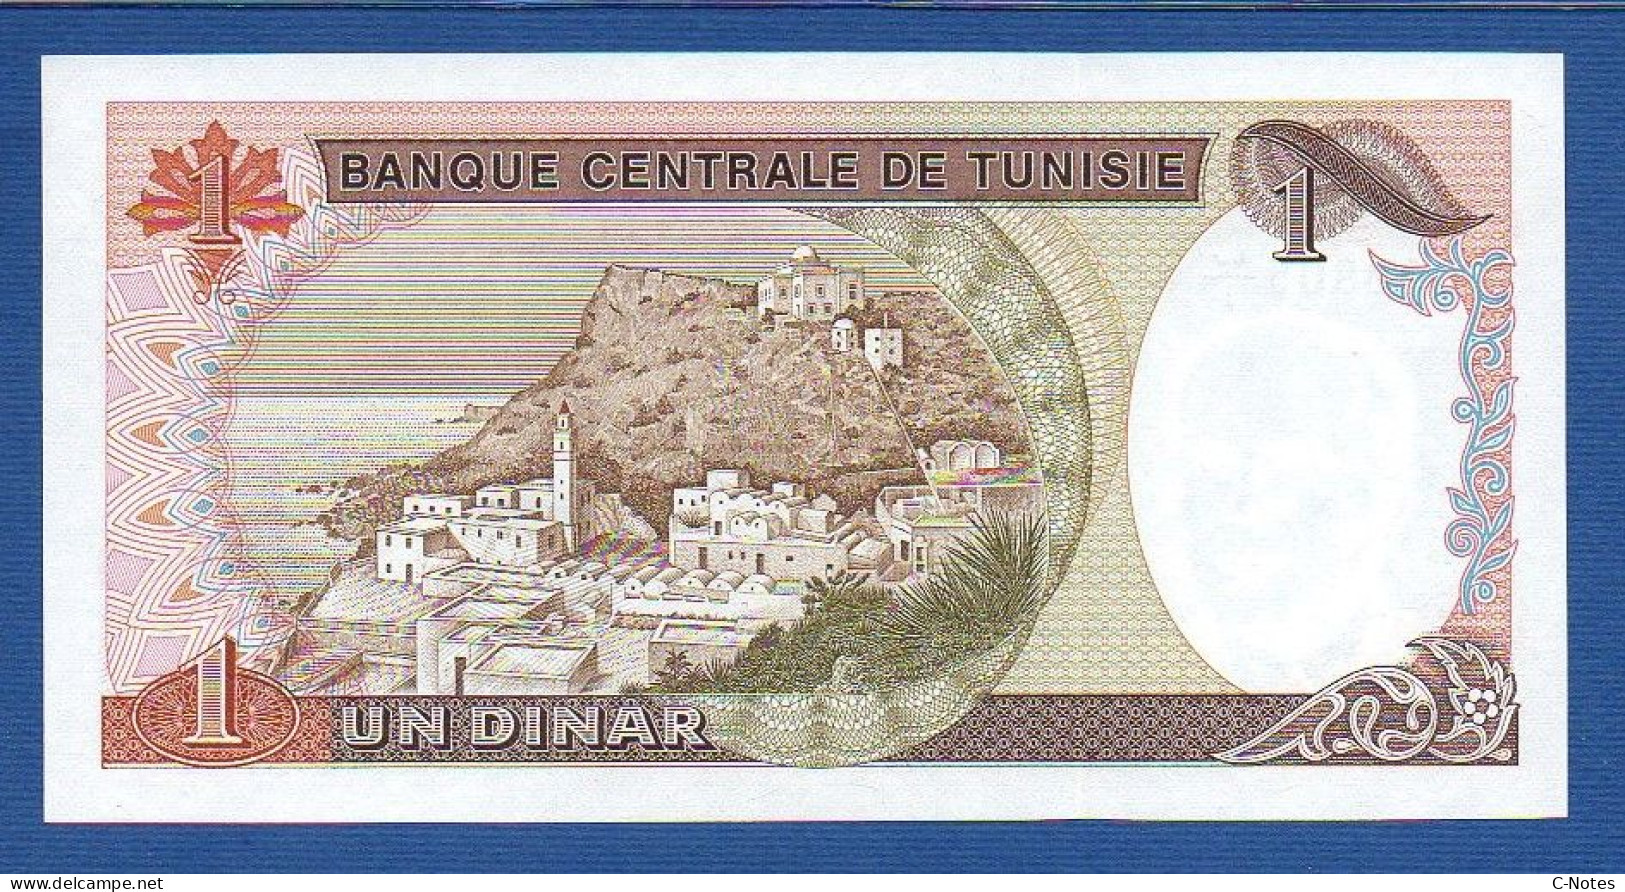 TUNISIA - P.74 – 1 Dinar 15.10.1980 UNC, Serie 8/1 099805 - Tunisia